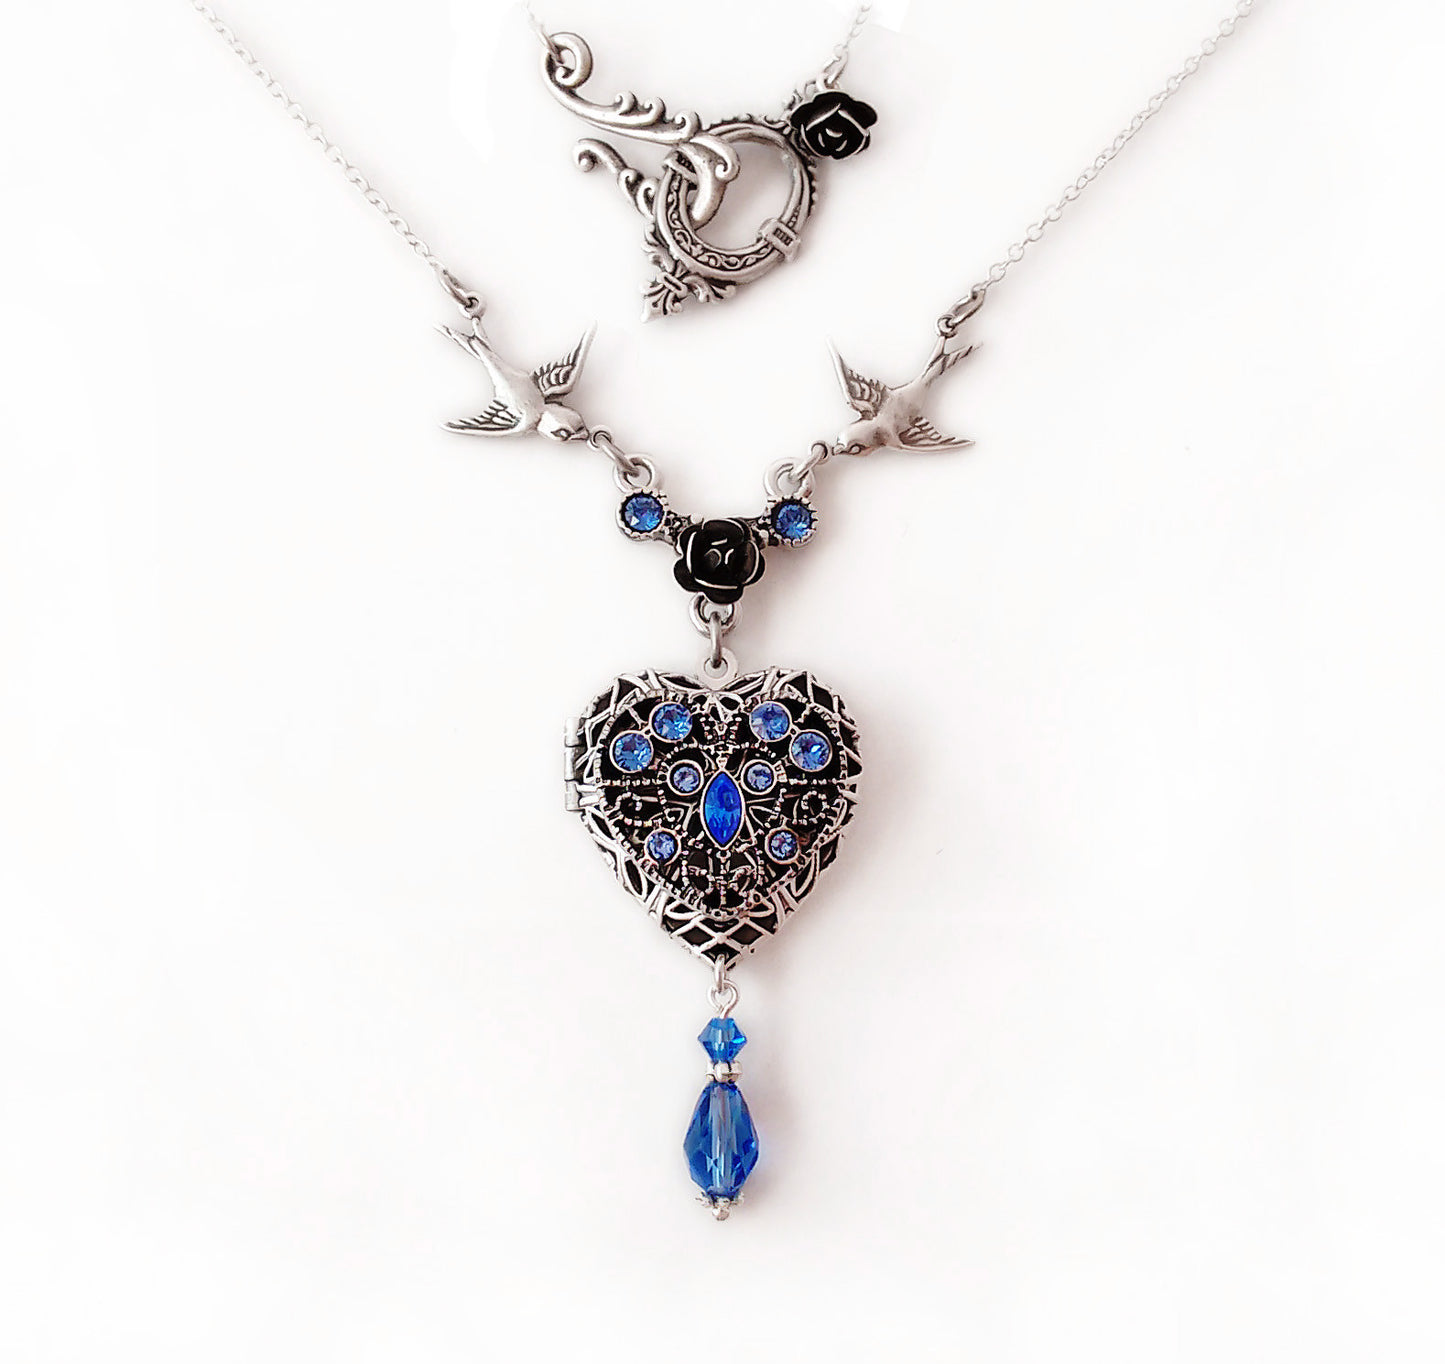 Silver Heart Locket Necklace with Swarovski Crystals